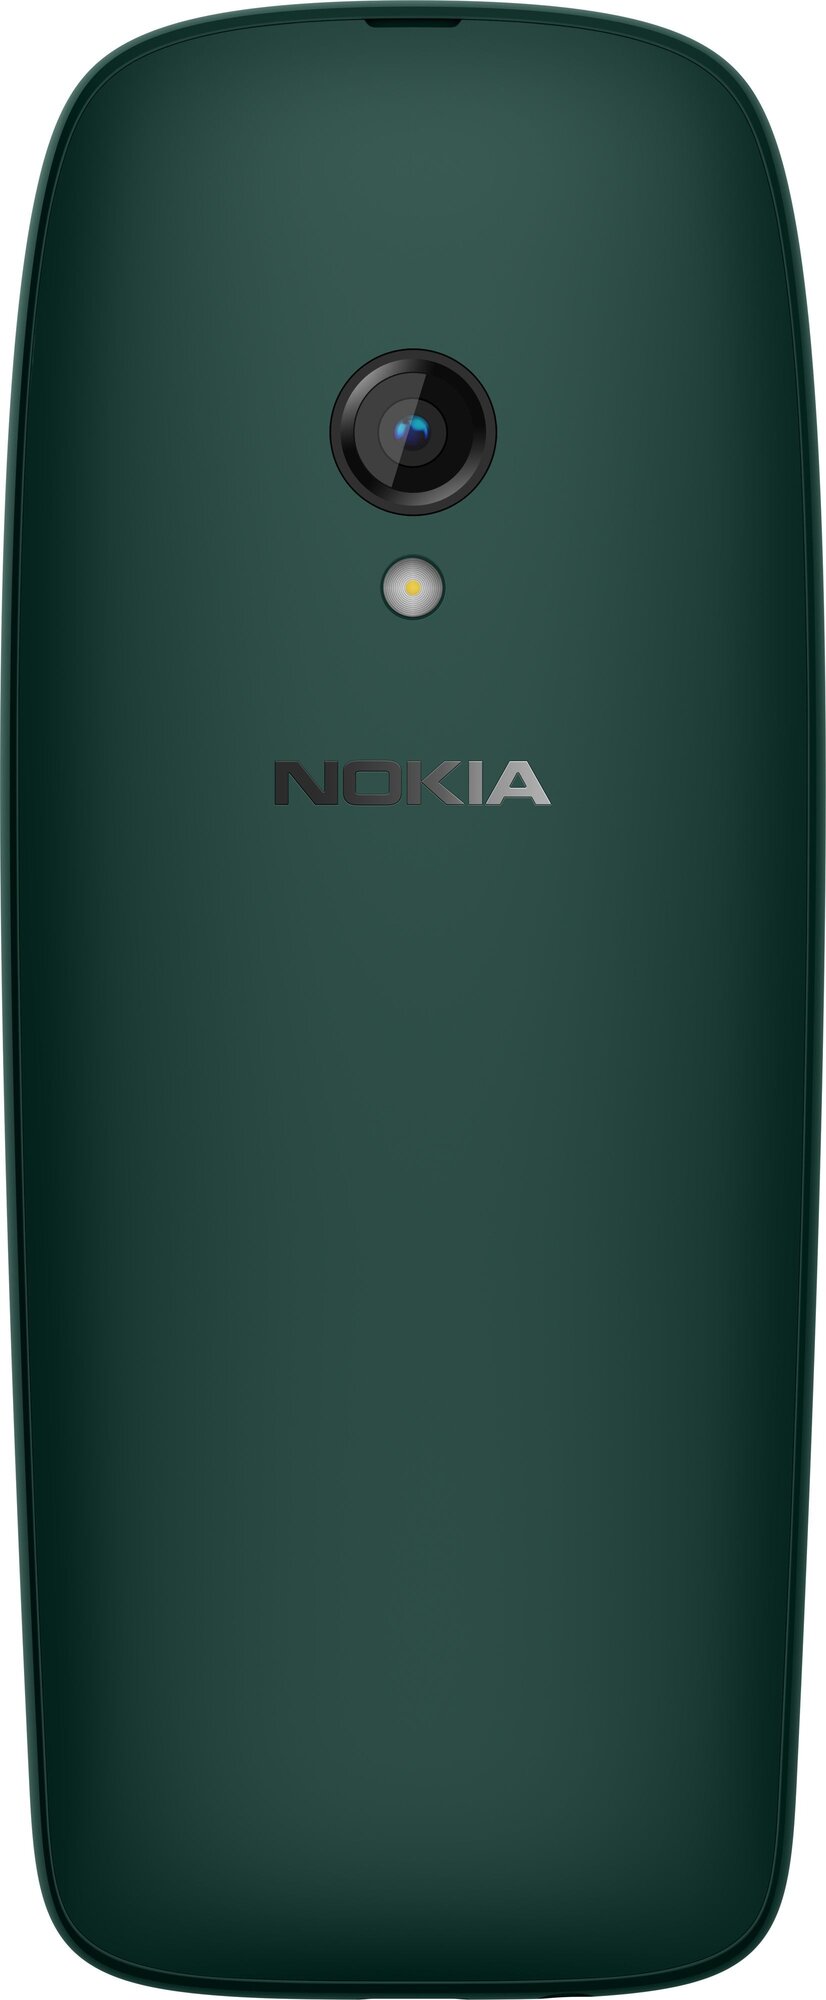 Nokia - фото №2